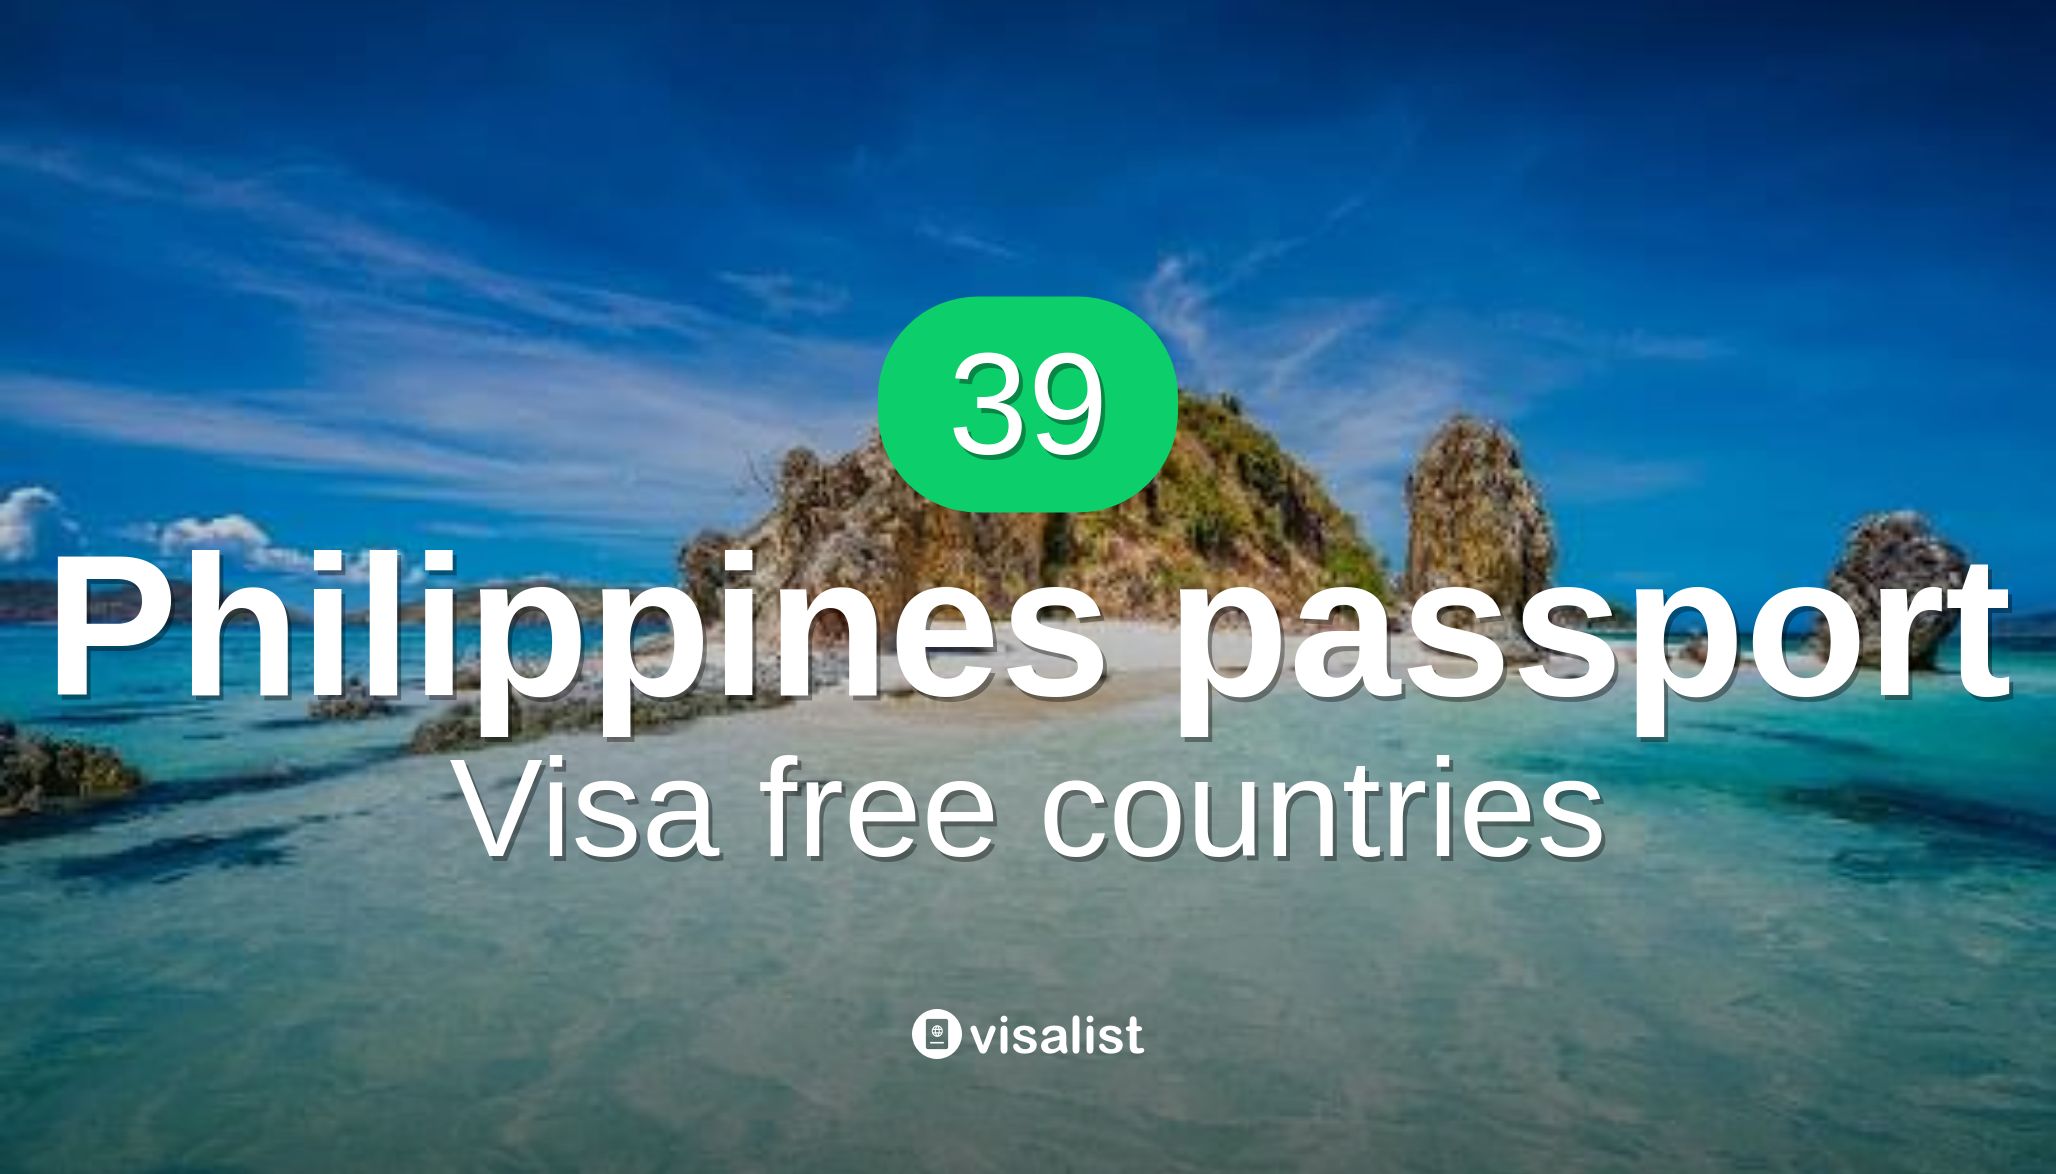 visa free travel for philippine passport